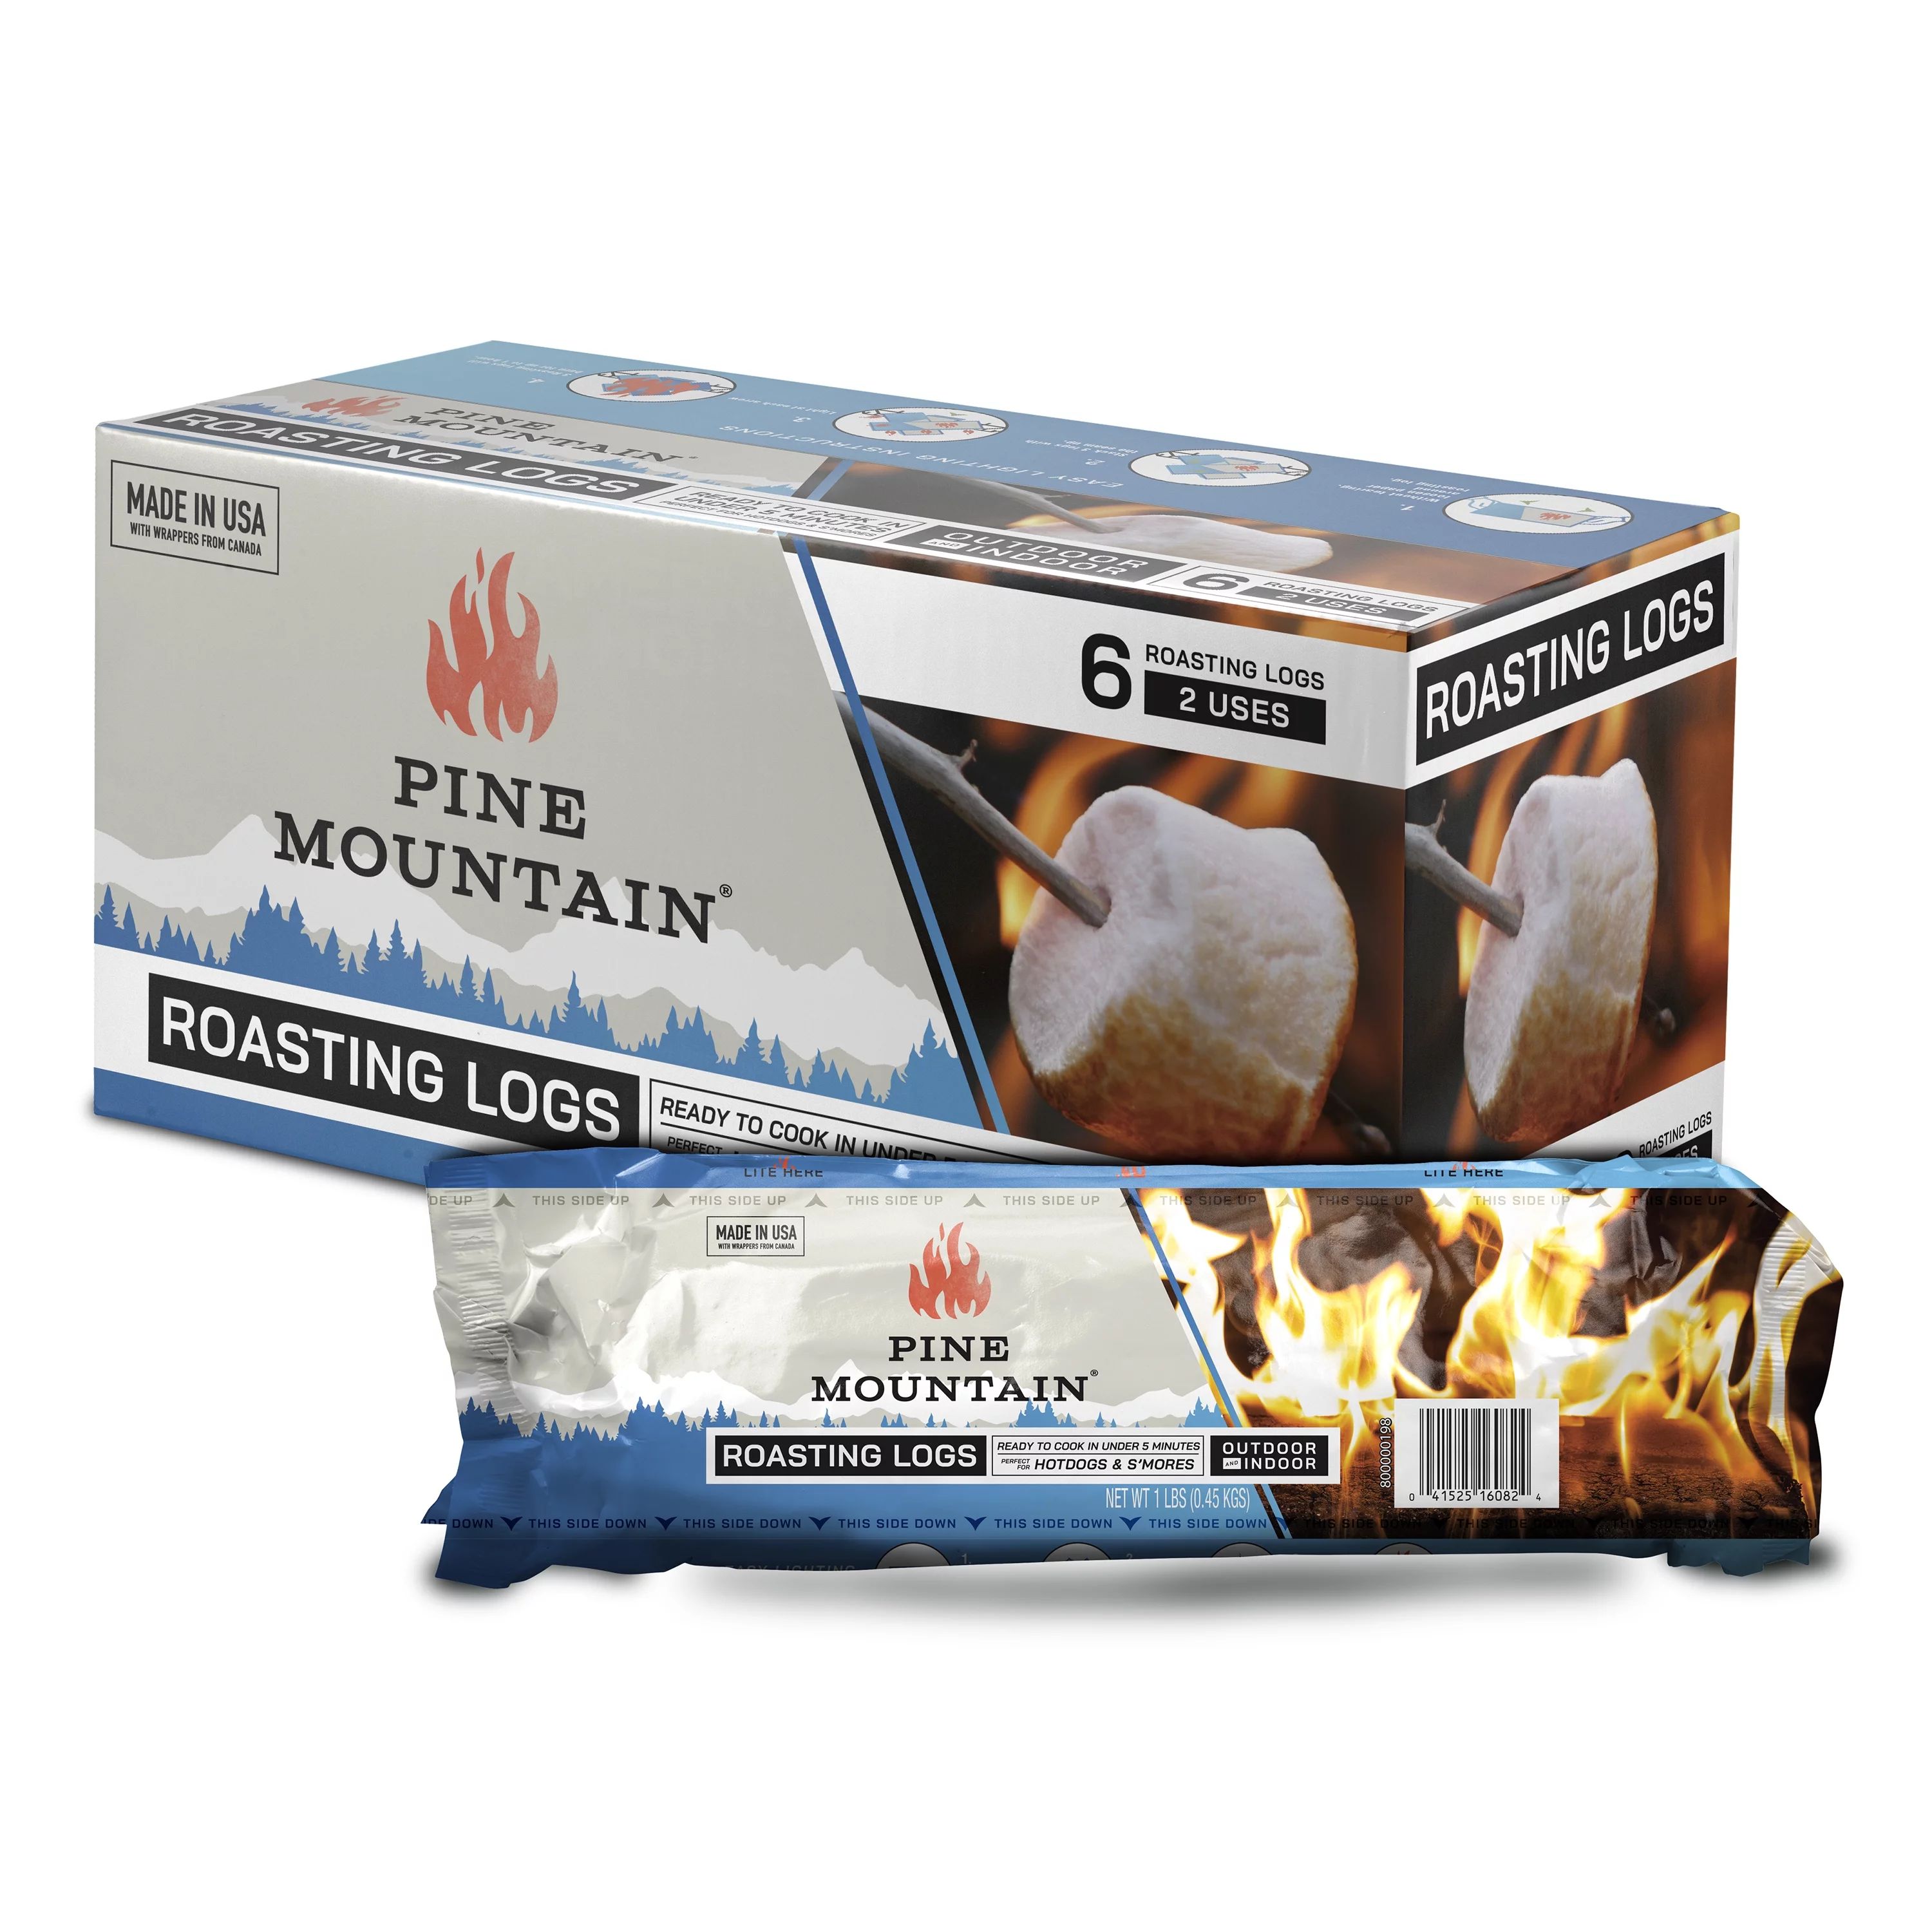 Pine Mountain Roasting Log for Campfires, 6 logs, 2 Use Pack, Food-Safe Cooking Firelog | Walmart (US)